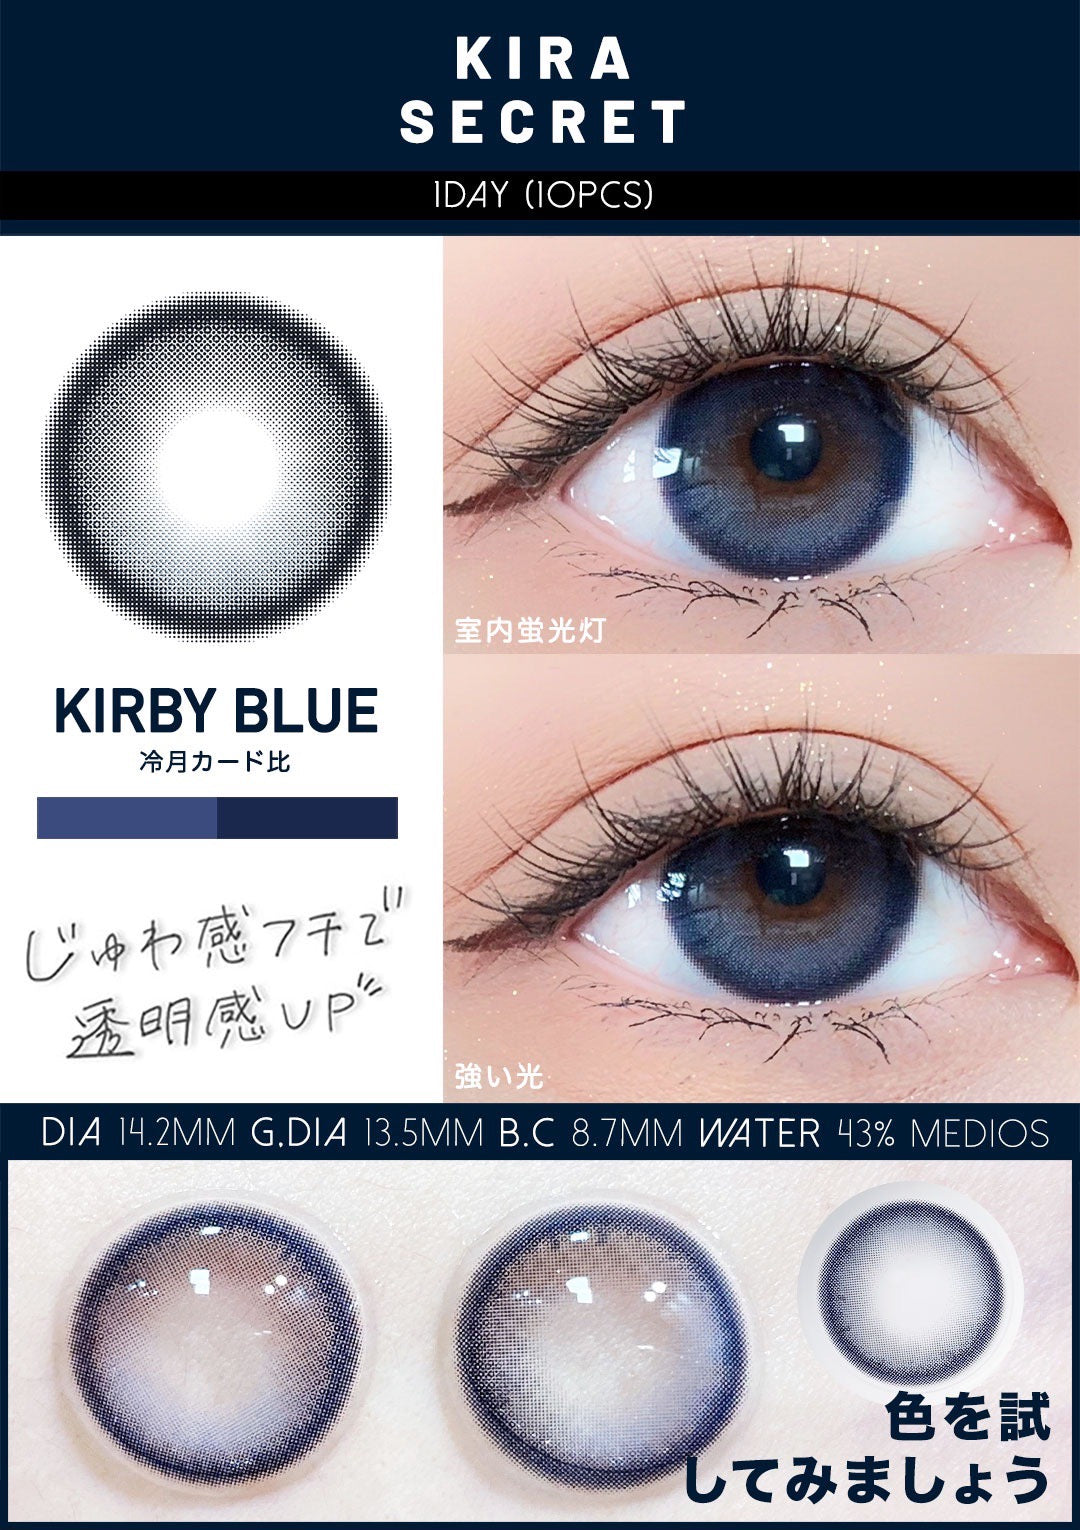 KiraSecret Kirby Blue 冷月卡比 1 Day